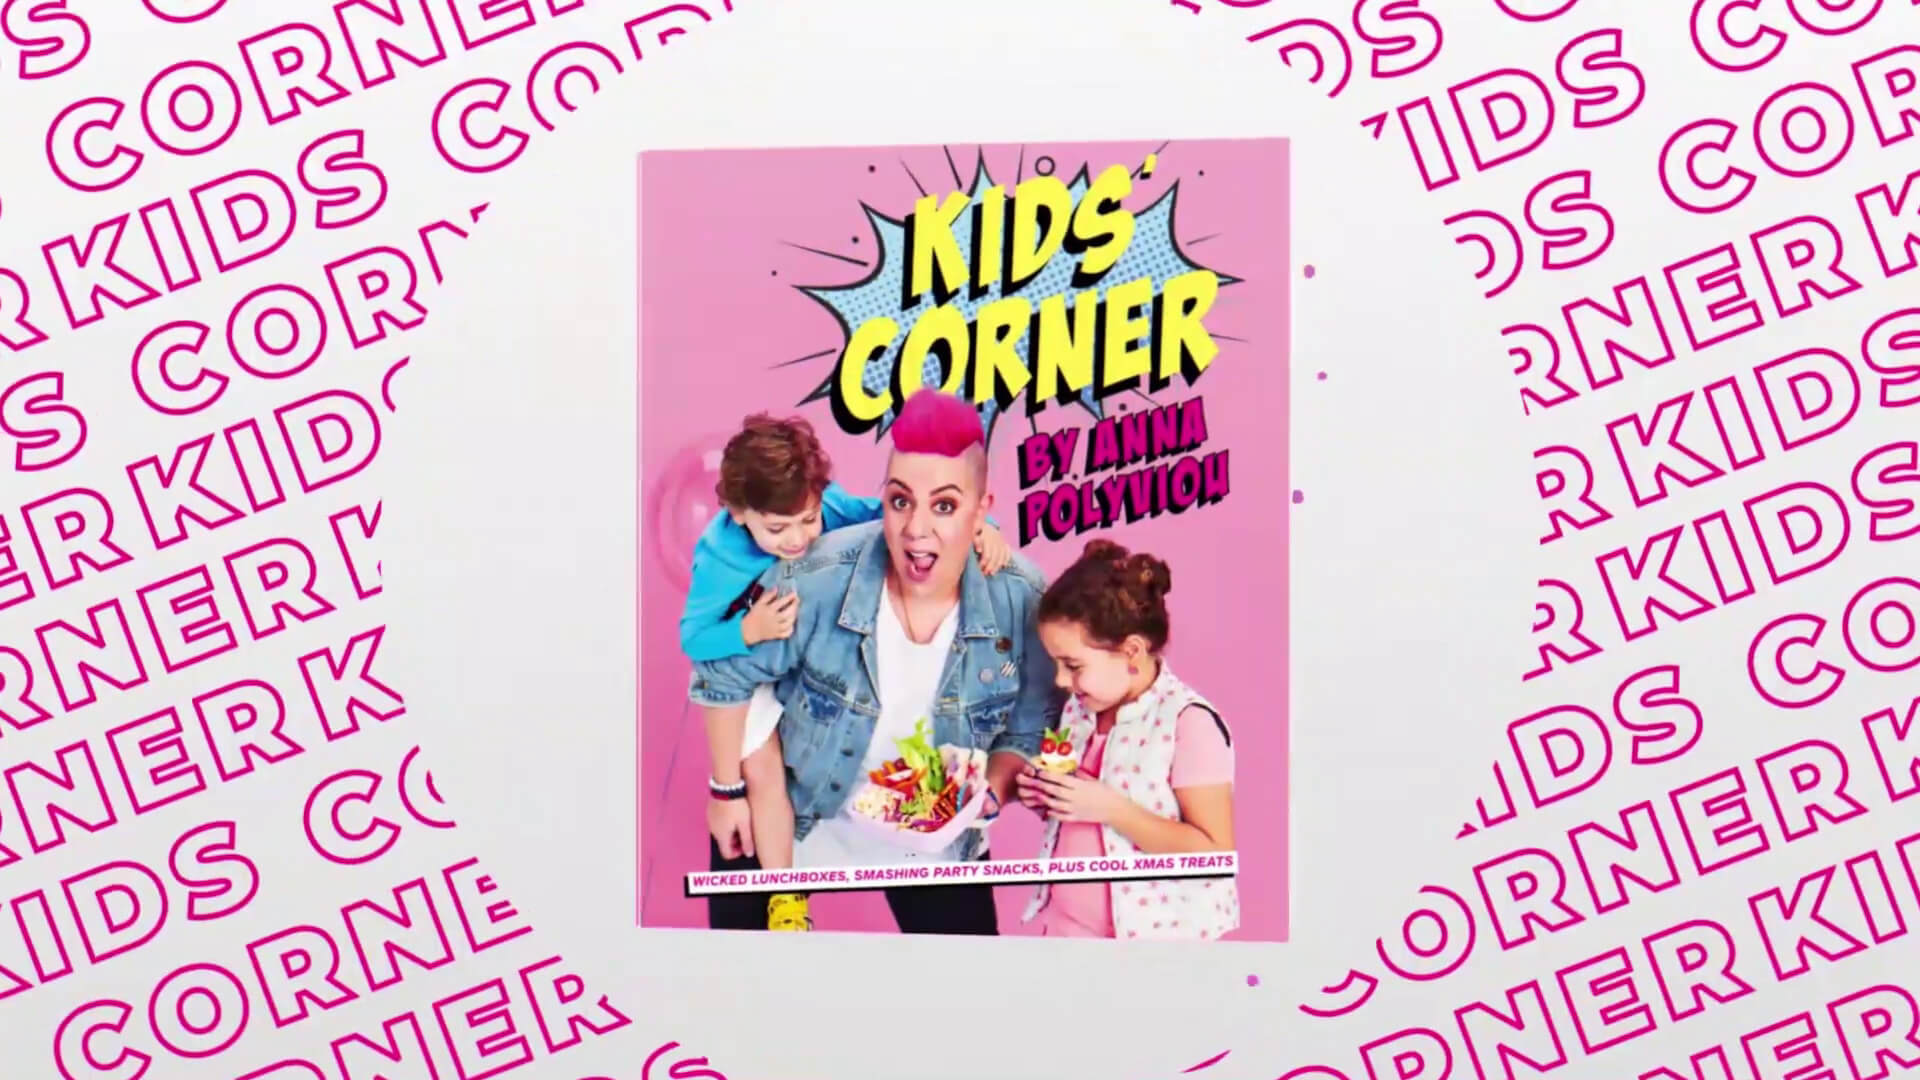 Kids Corner Animated explainer video